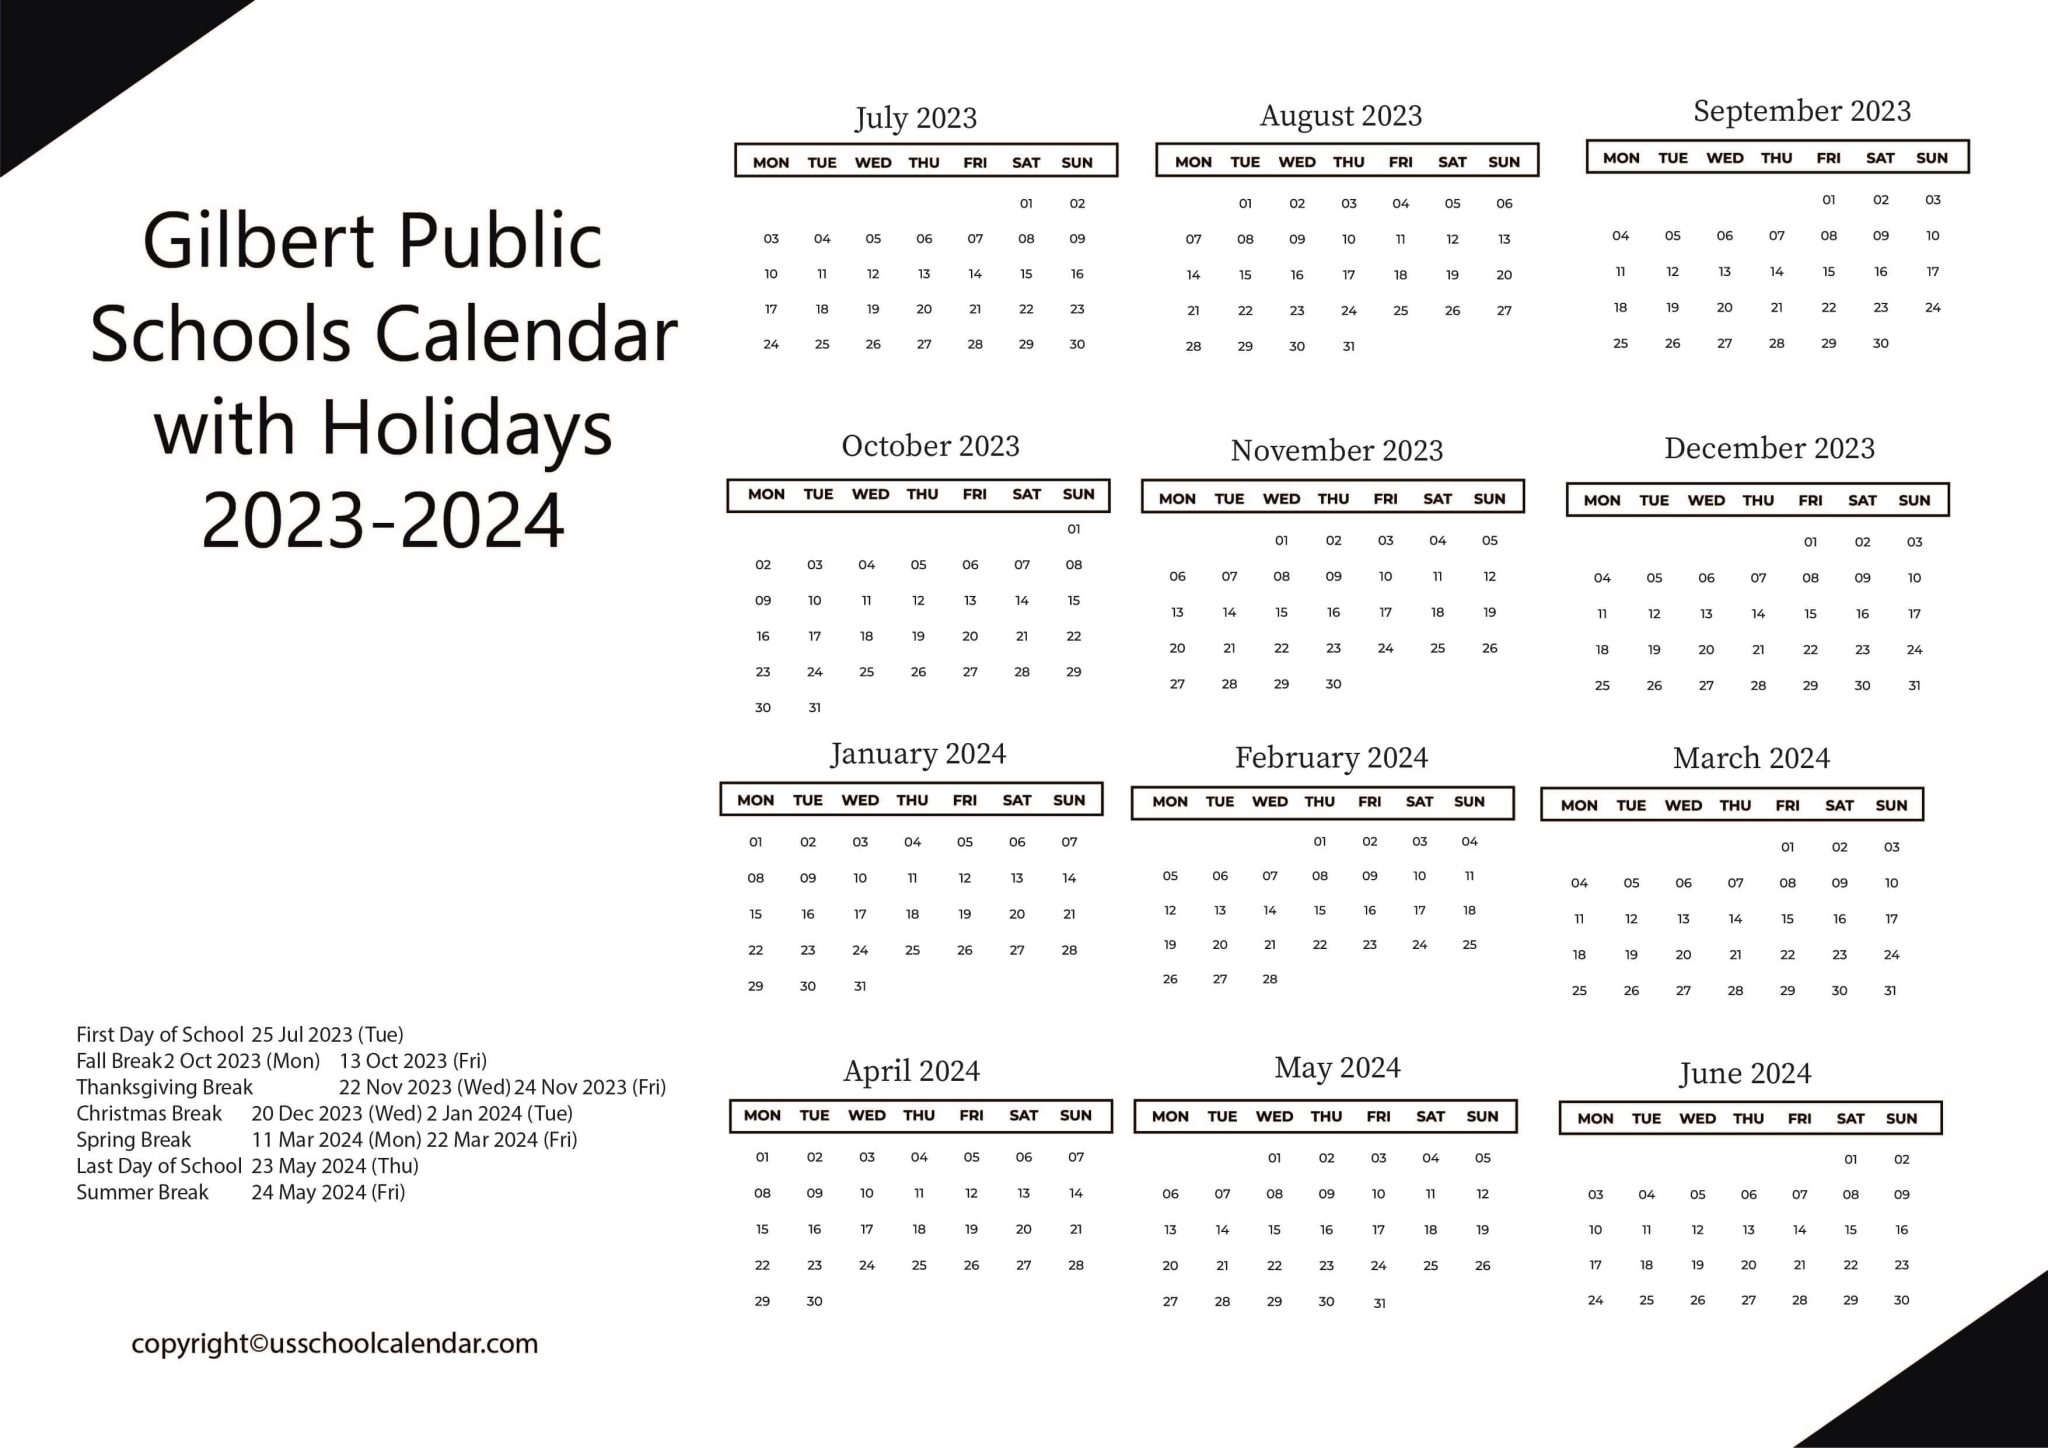 Gilbert Public Schools Calendar with Holidays 2023 2024